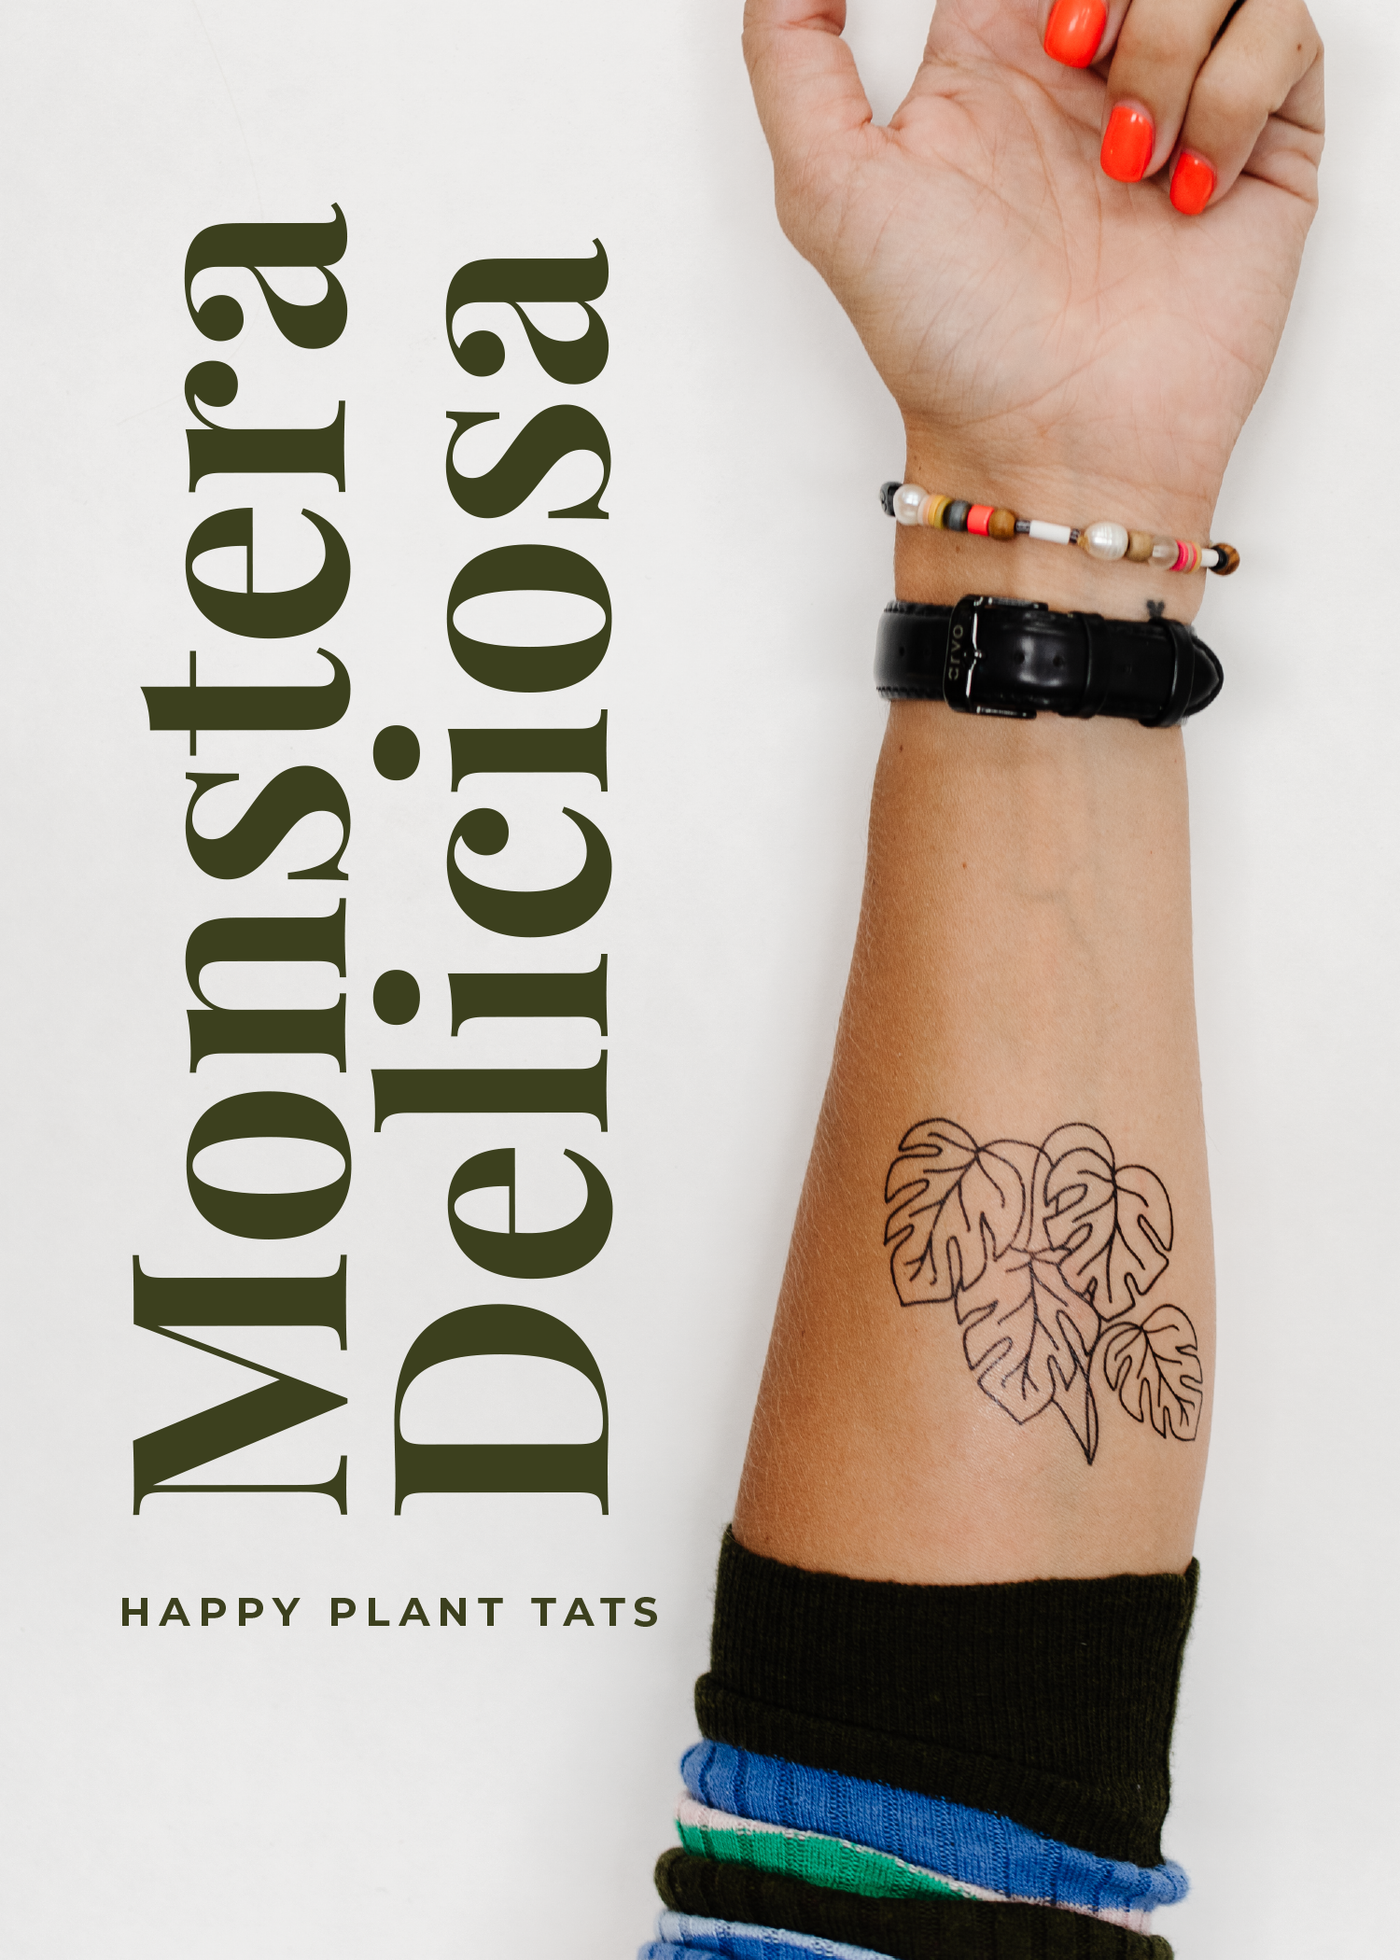 Houseplant half sleeve by Eilo Martin at MTL Tattoo Montreal  rtattoos